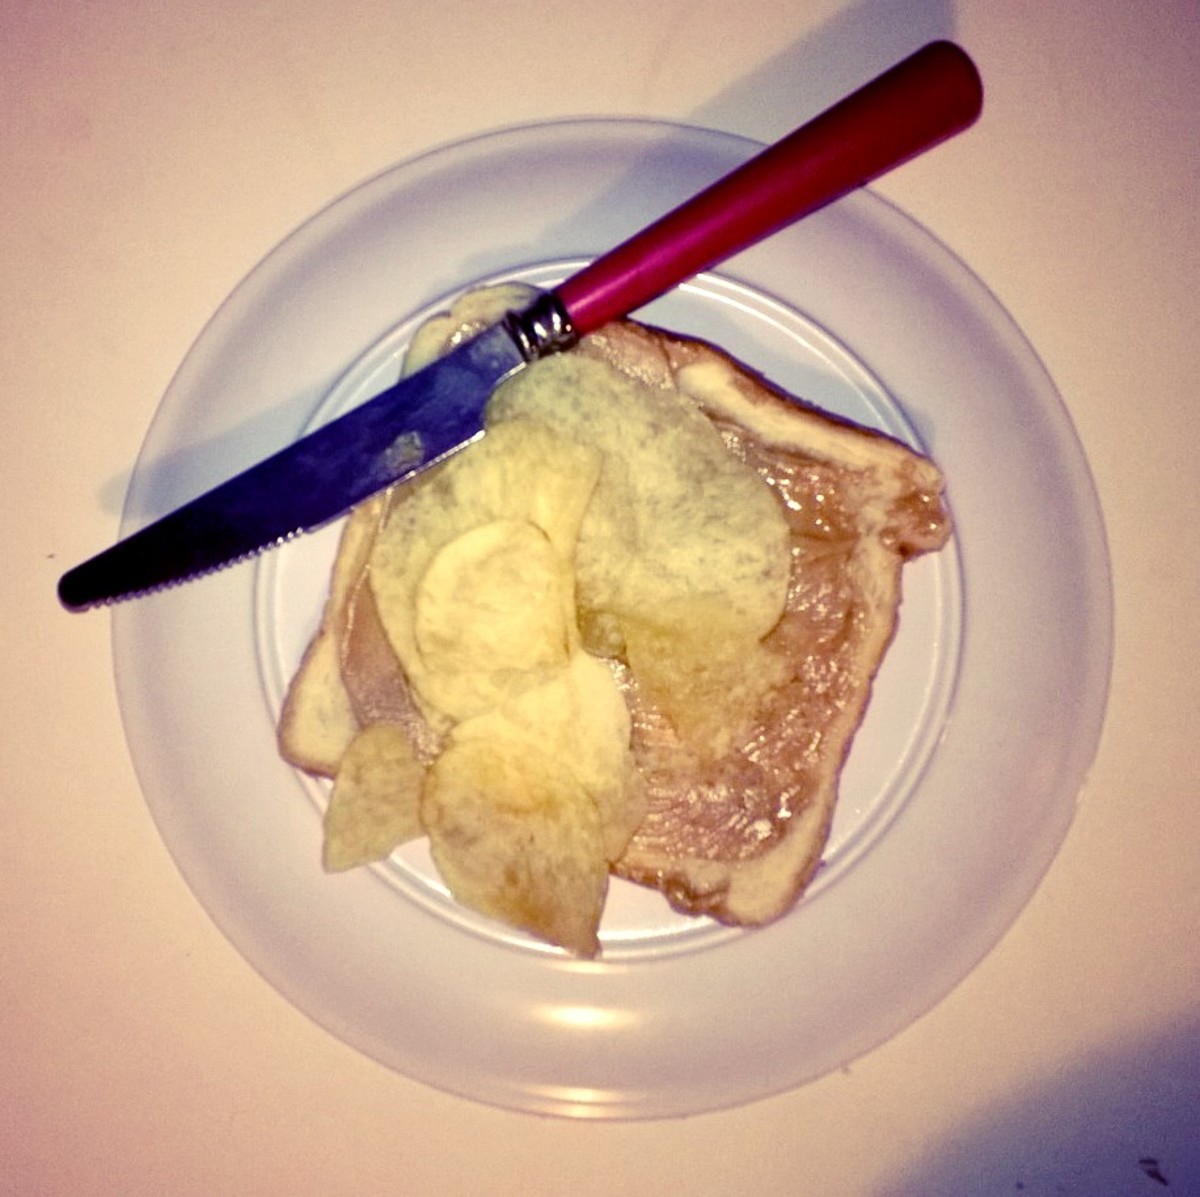 Peanut butter and potato chip sandwich